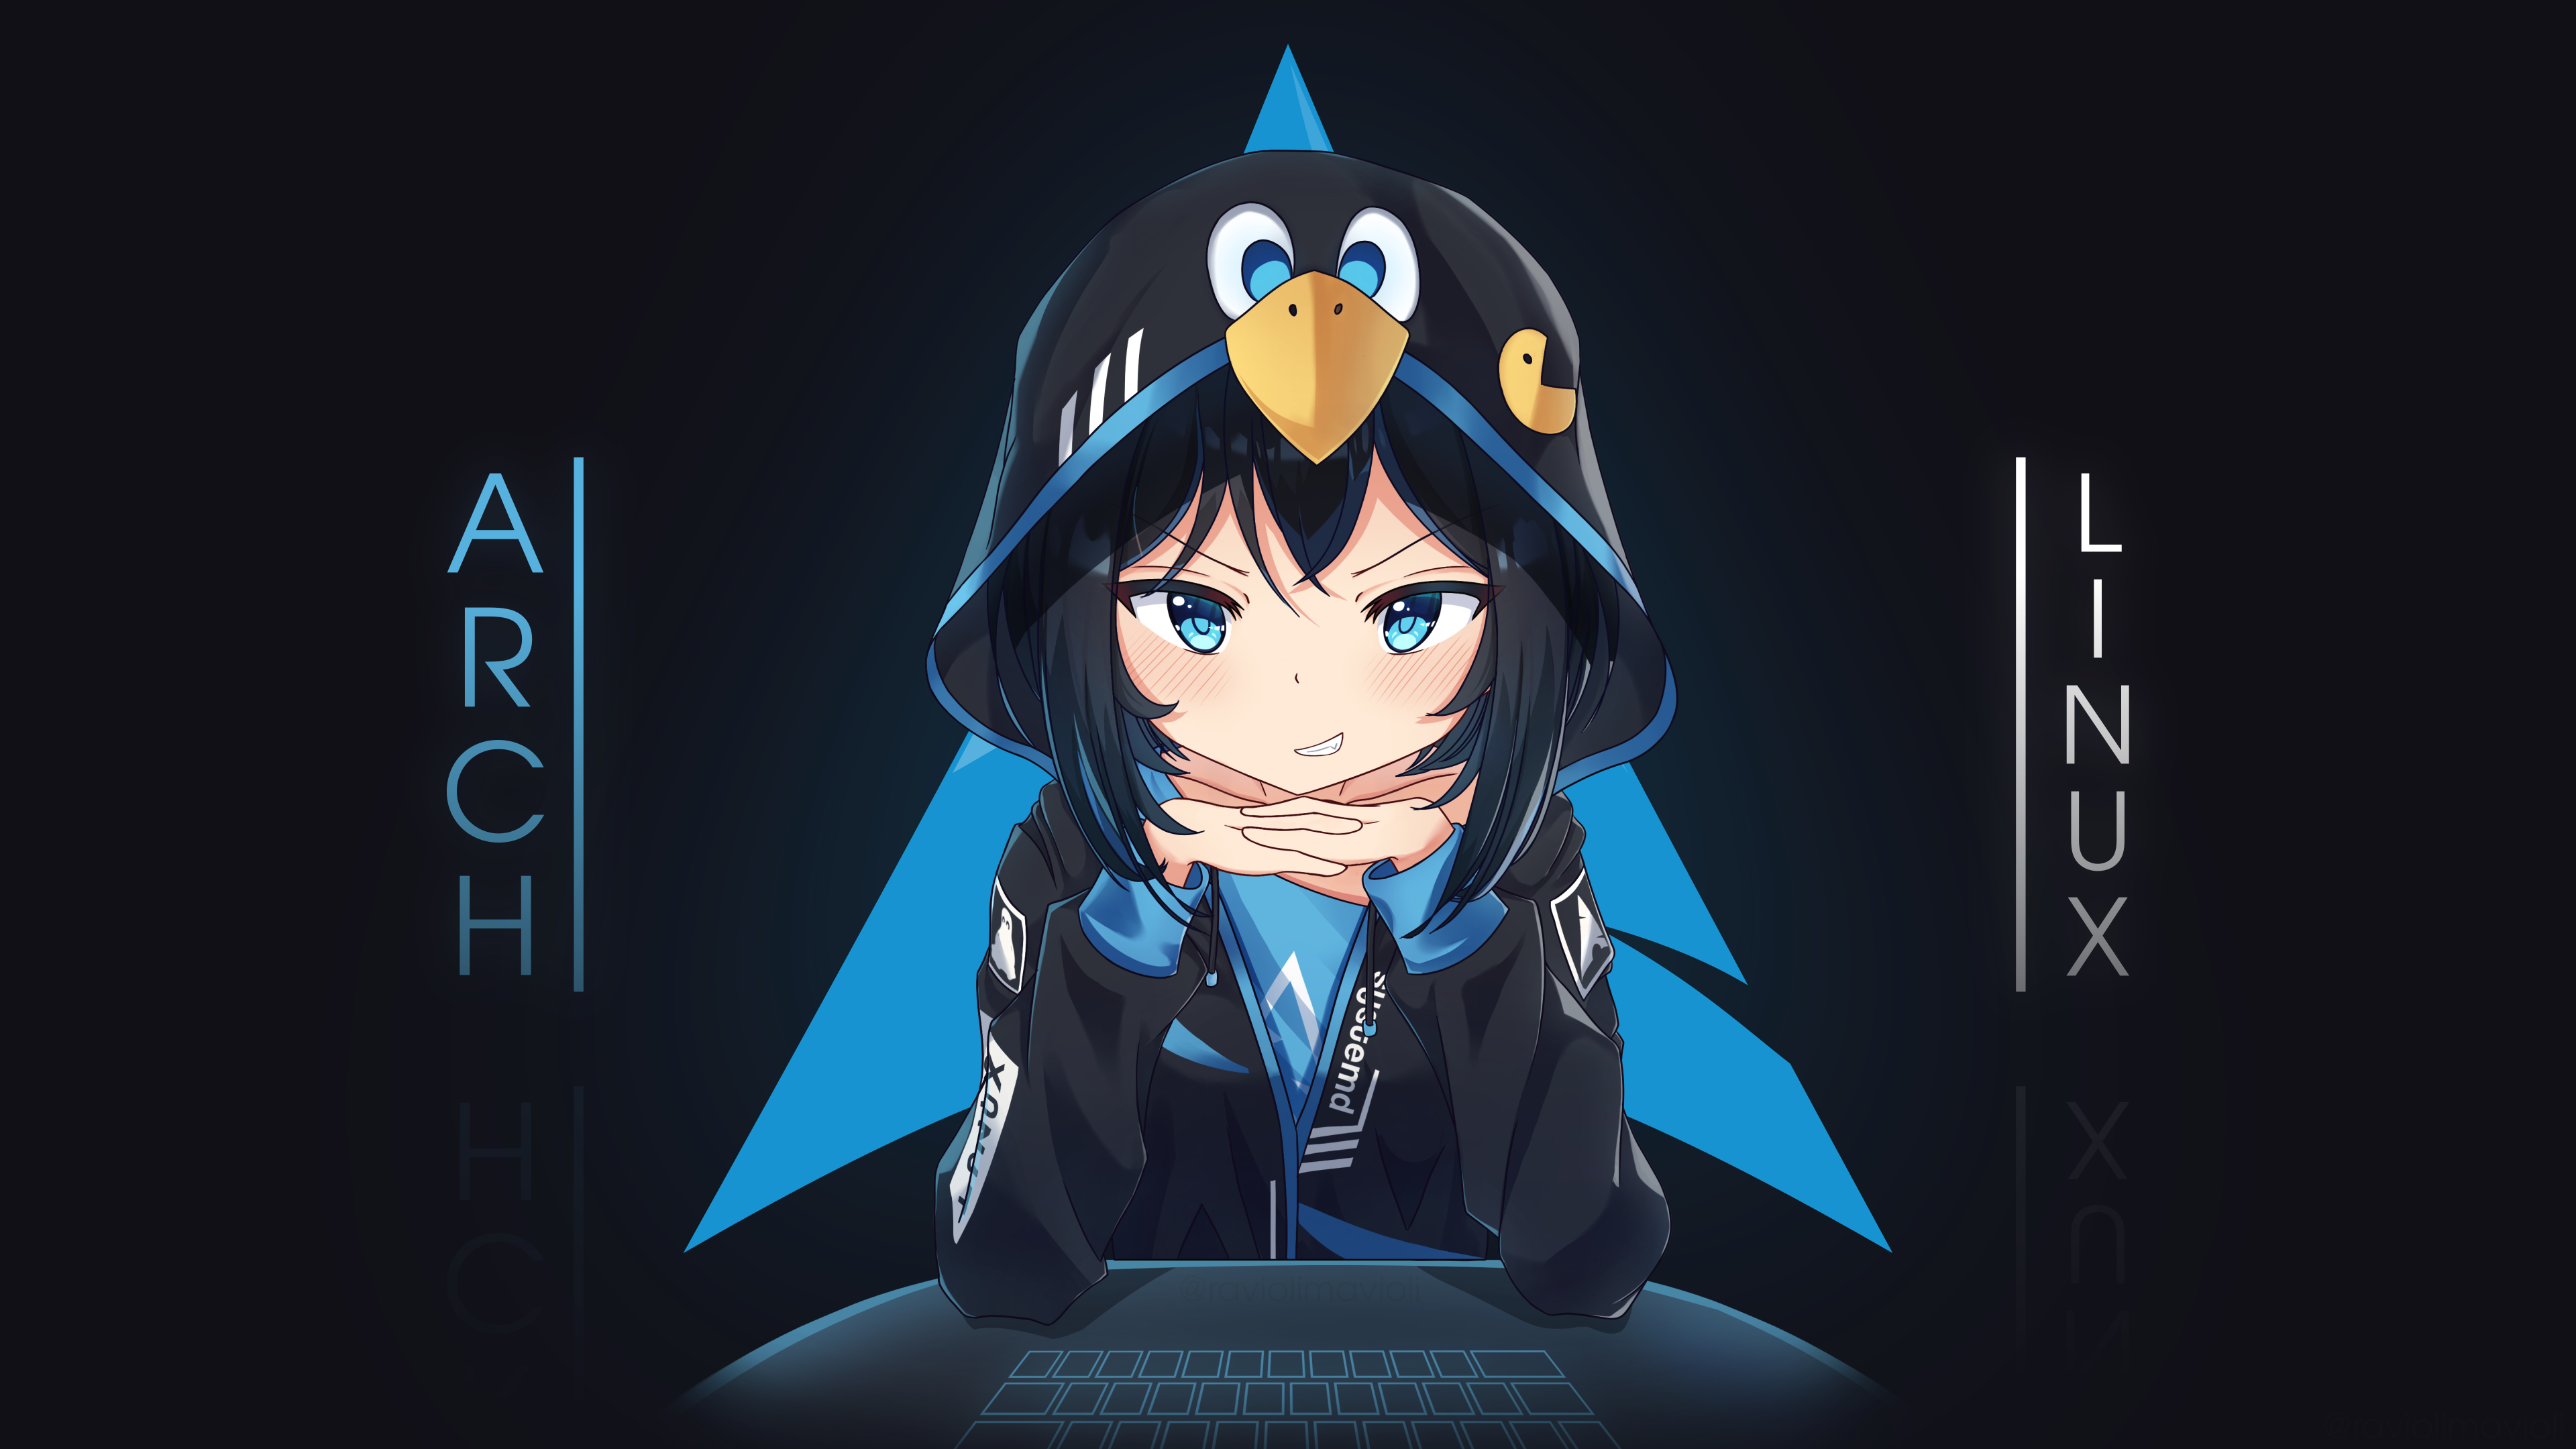 Anime Anime Girls Technology Software Arch Linux Dark Background White Skin Blue Eyes Fan Art 3840x2160